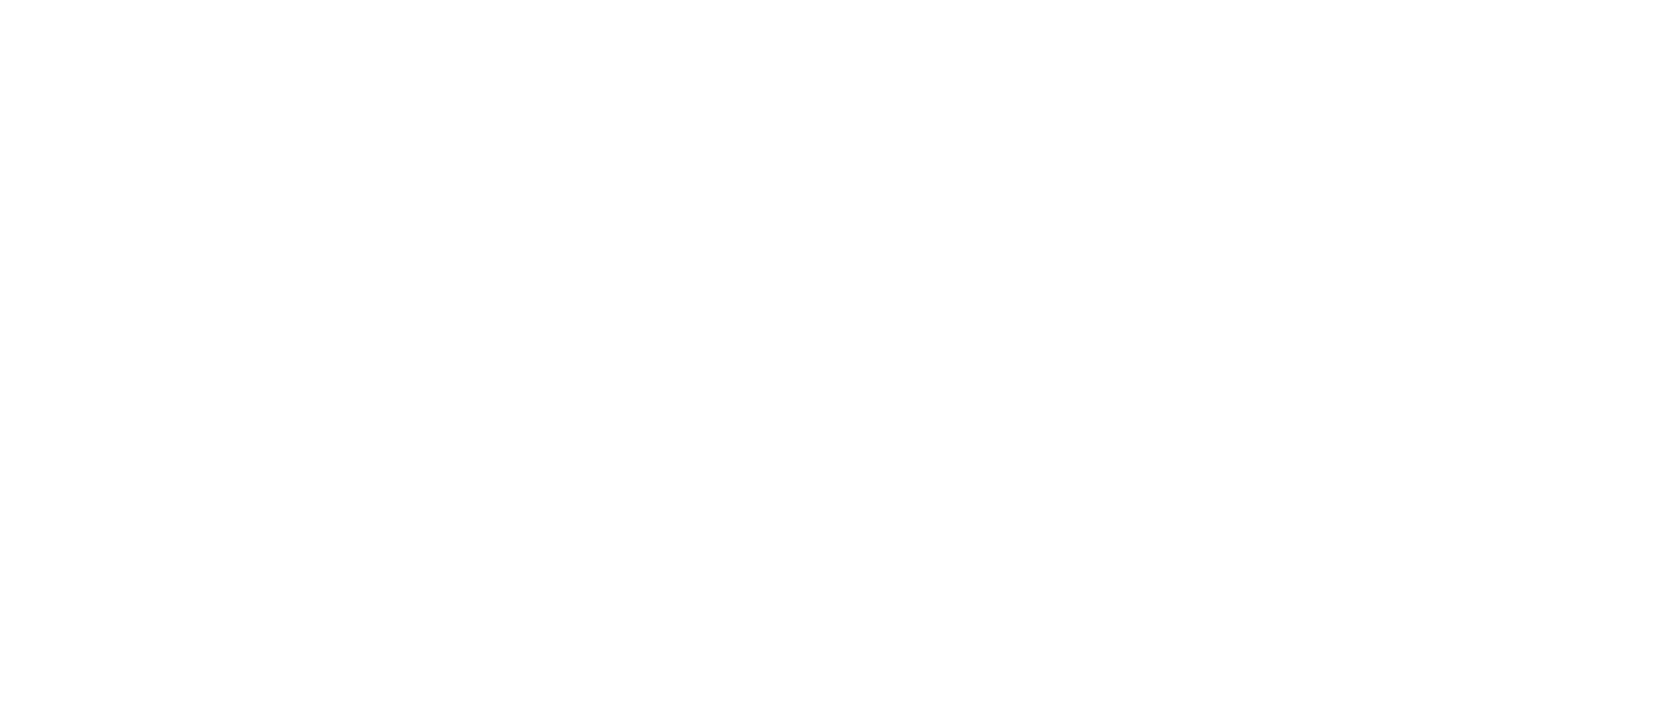 A plain white triangle shape illustrating an average mountain next to a summit.